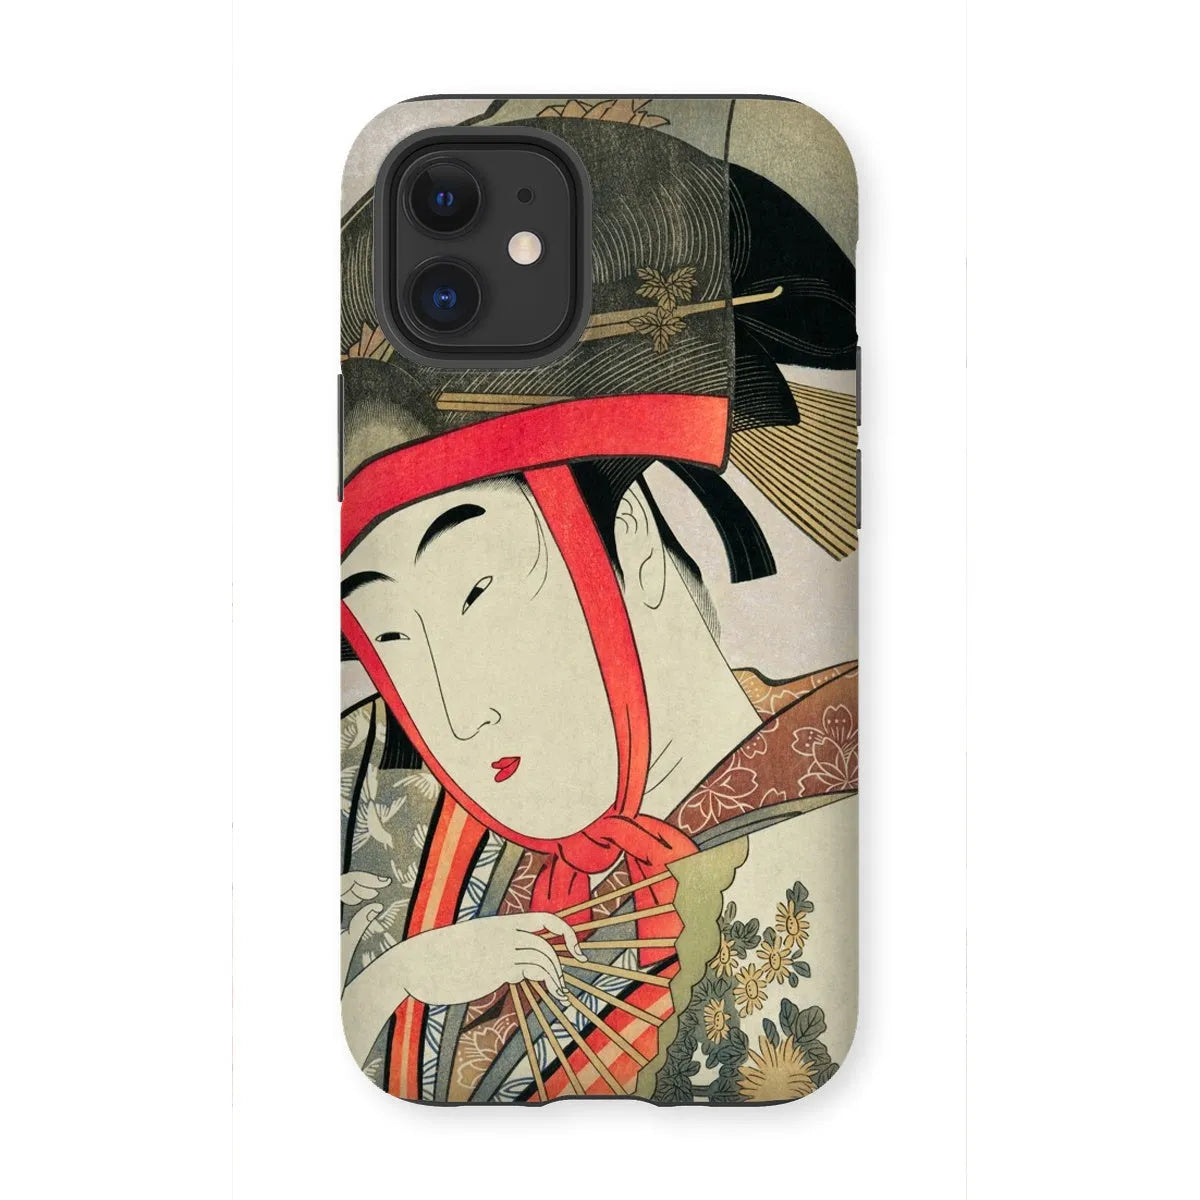 Yoshiwara Suzume - Japanese Ukiyo-e Art Phone Case - Utamaro - Iphone 12 Mini / Matte - Mobile Phone Cases - Aesthetic